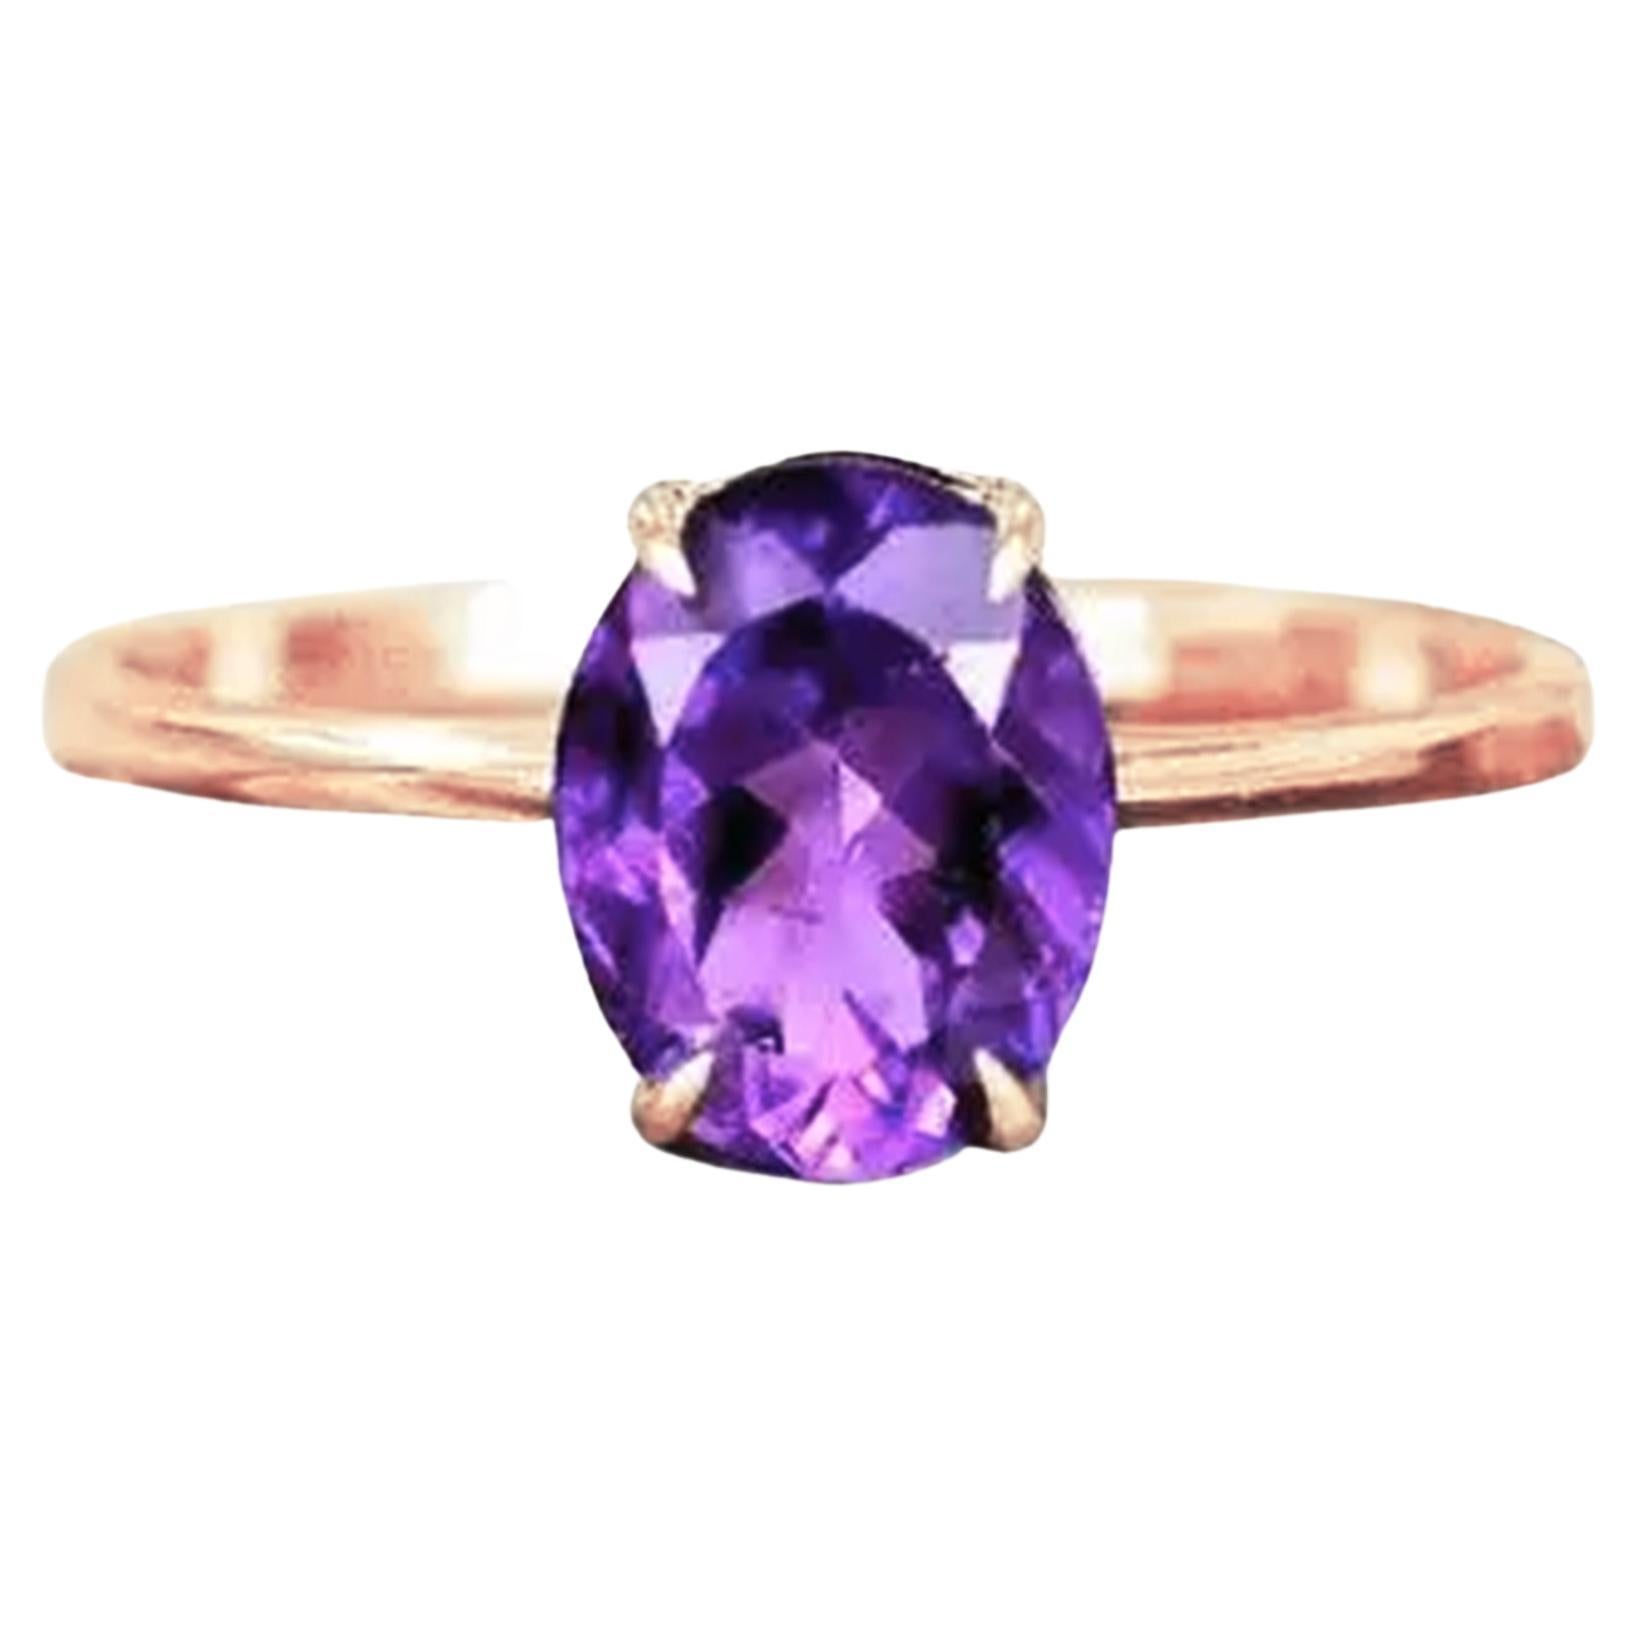 For Sale:  14k Gold Oval Gemstone 9x7 mm Oval Cut Gemstone Ring Gemstone Engagement Ring